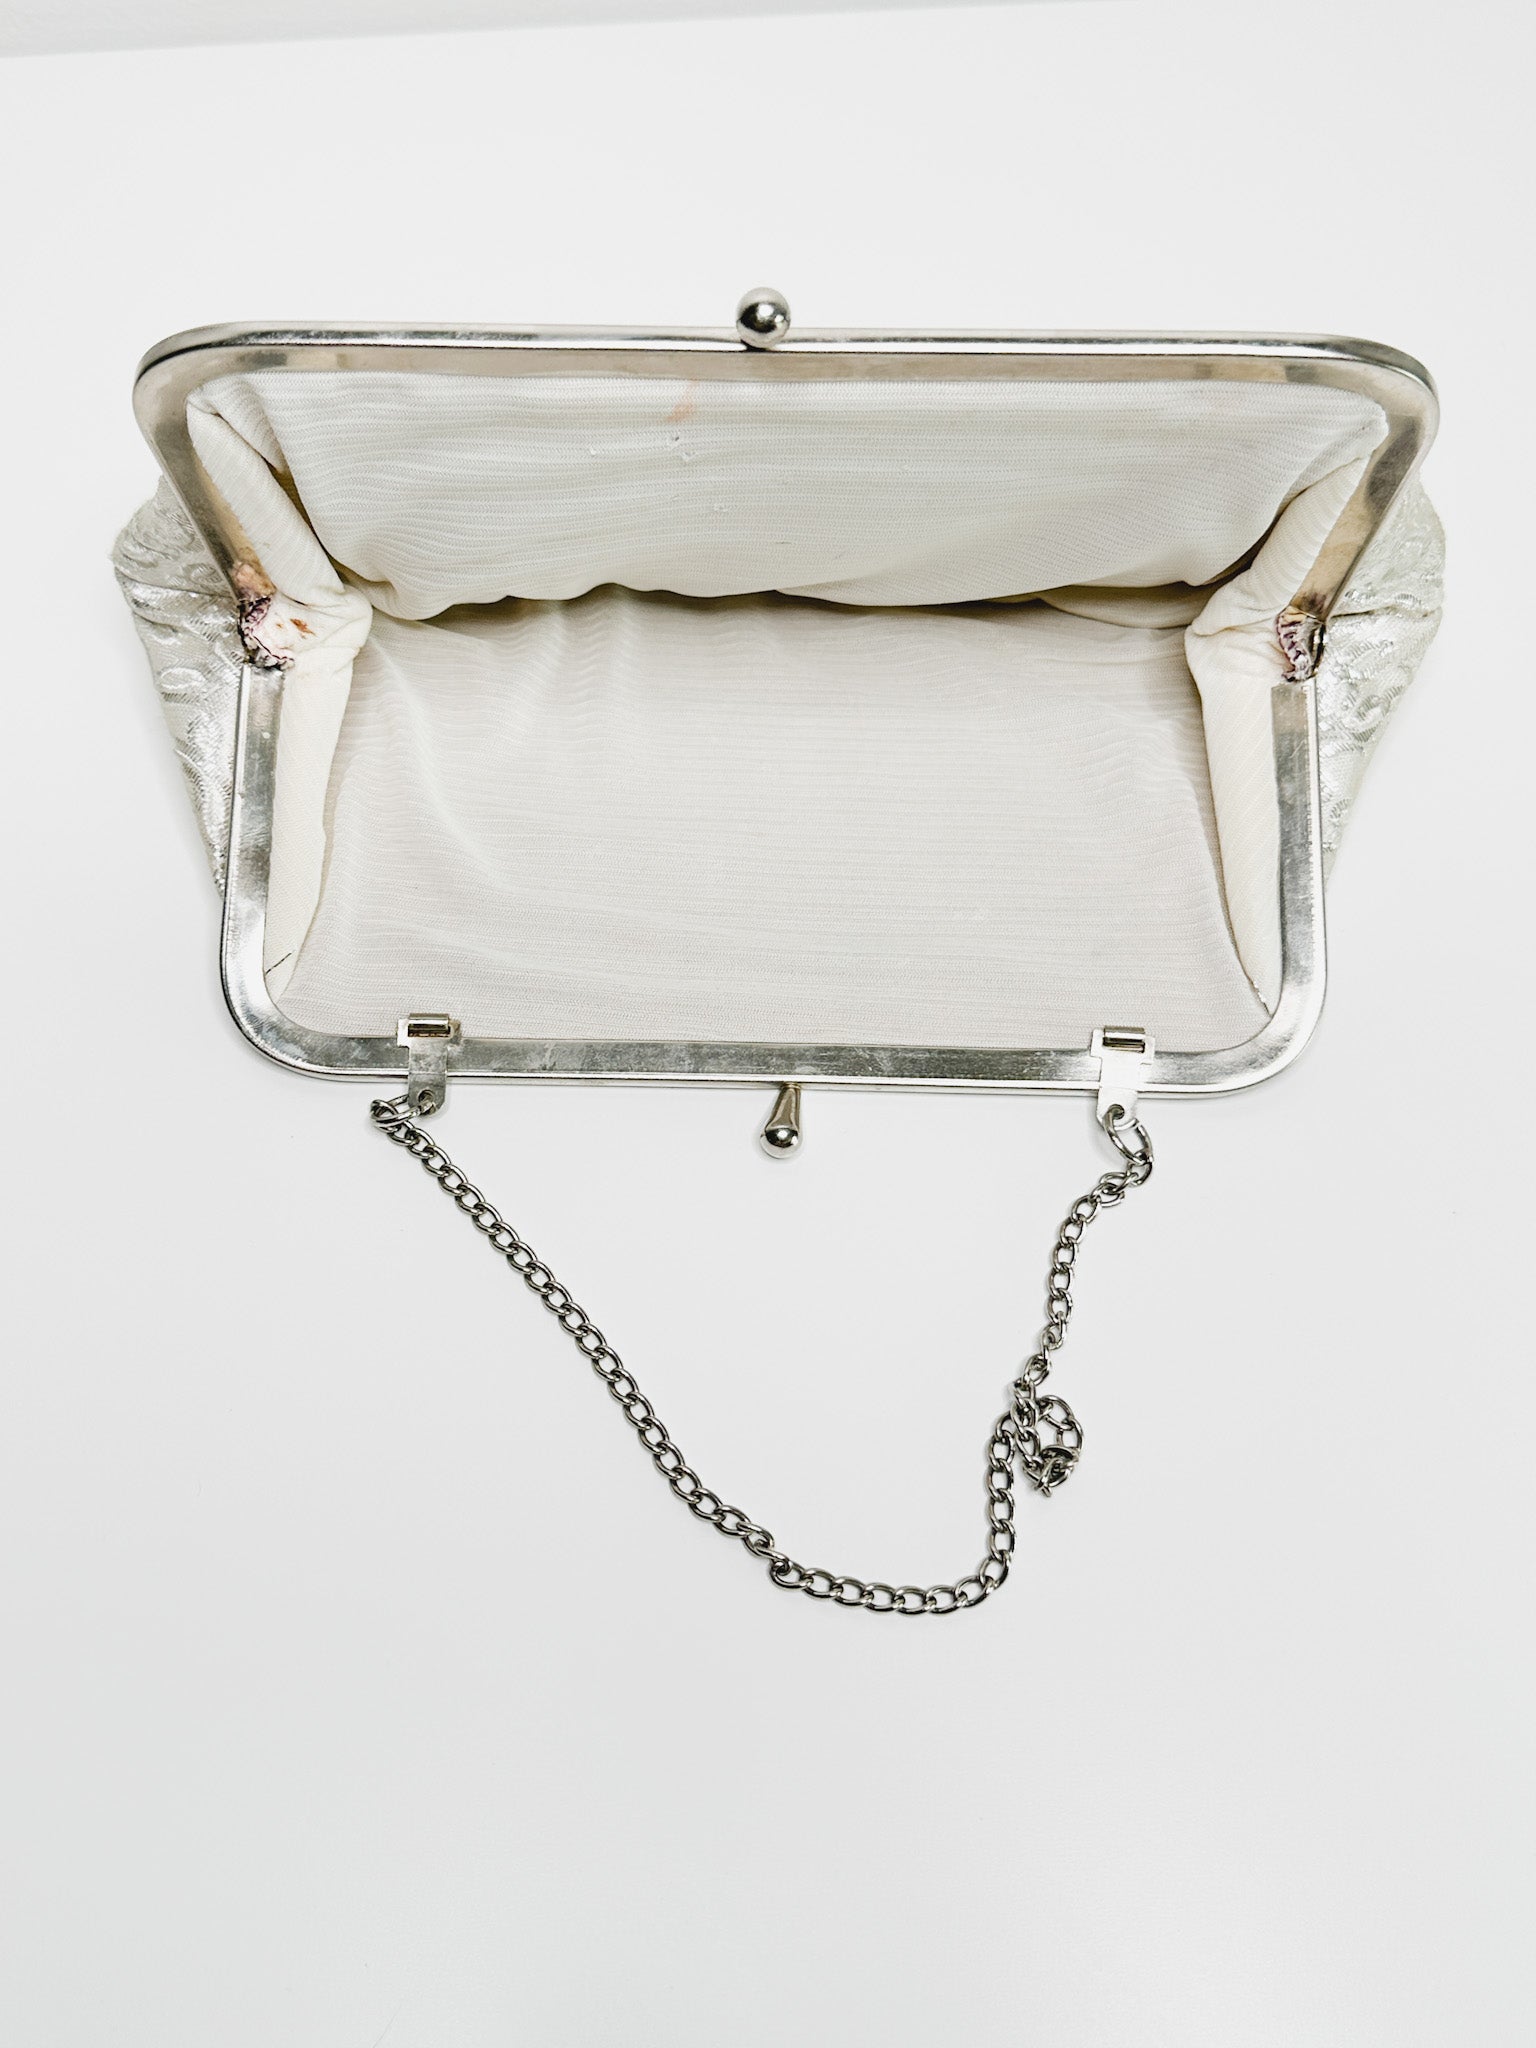 PURSEO Silver Clutch Pearl Purses for Women Handbag Bridal Evening Clutch  Bags for Party Wedding / Dulhan